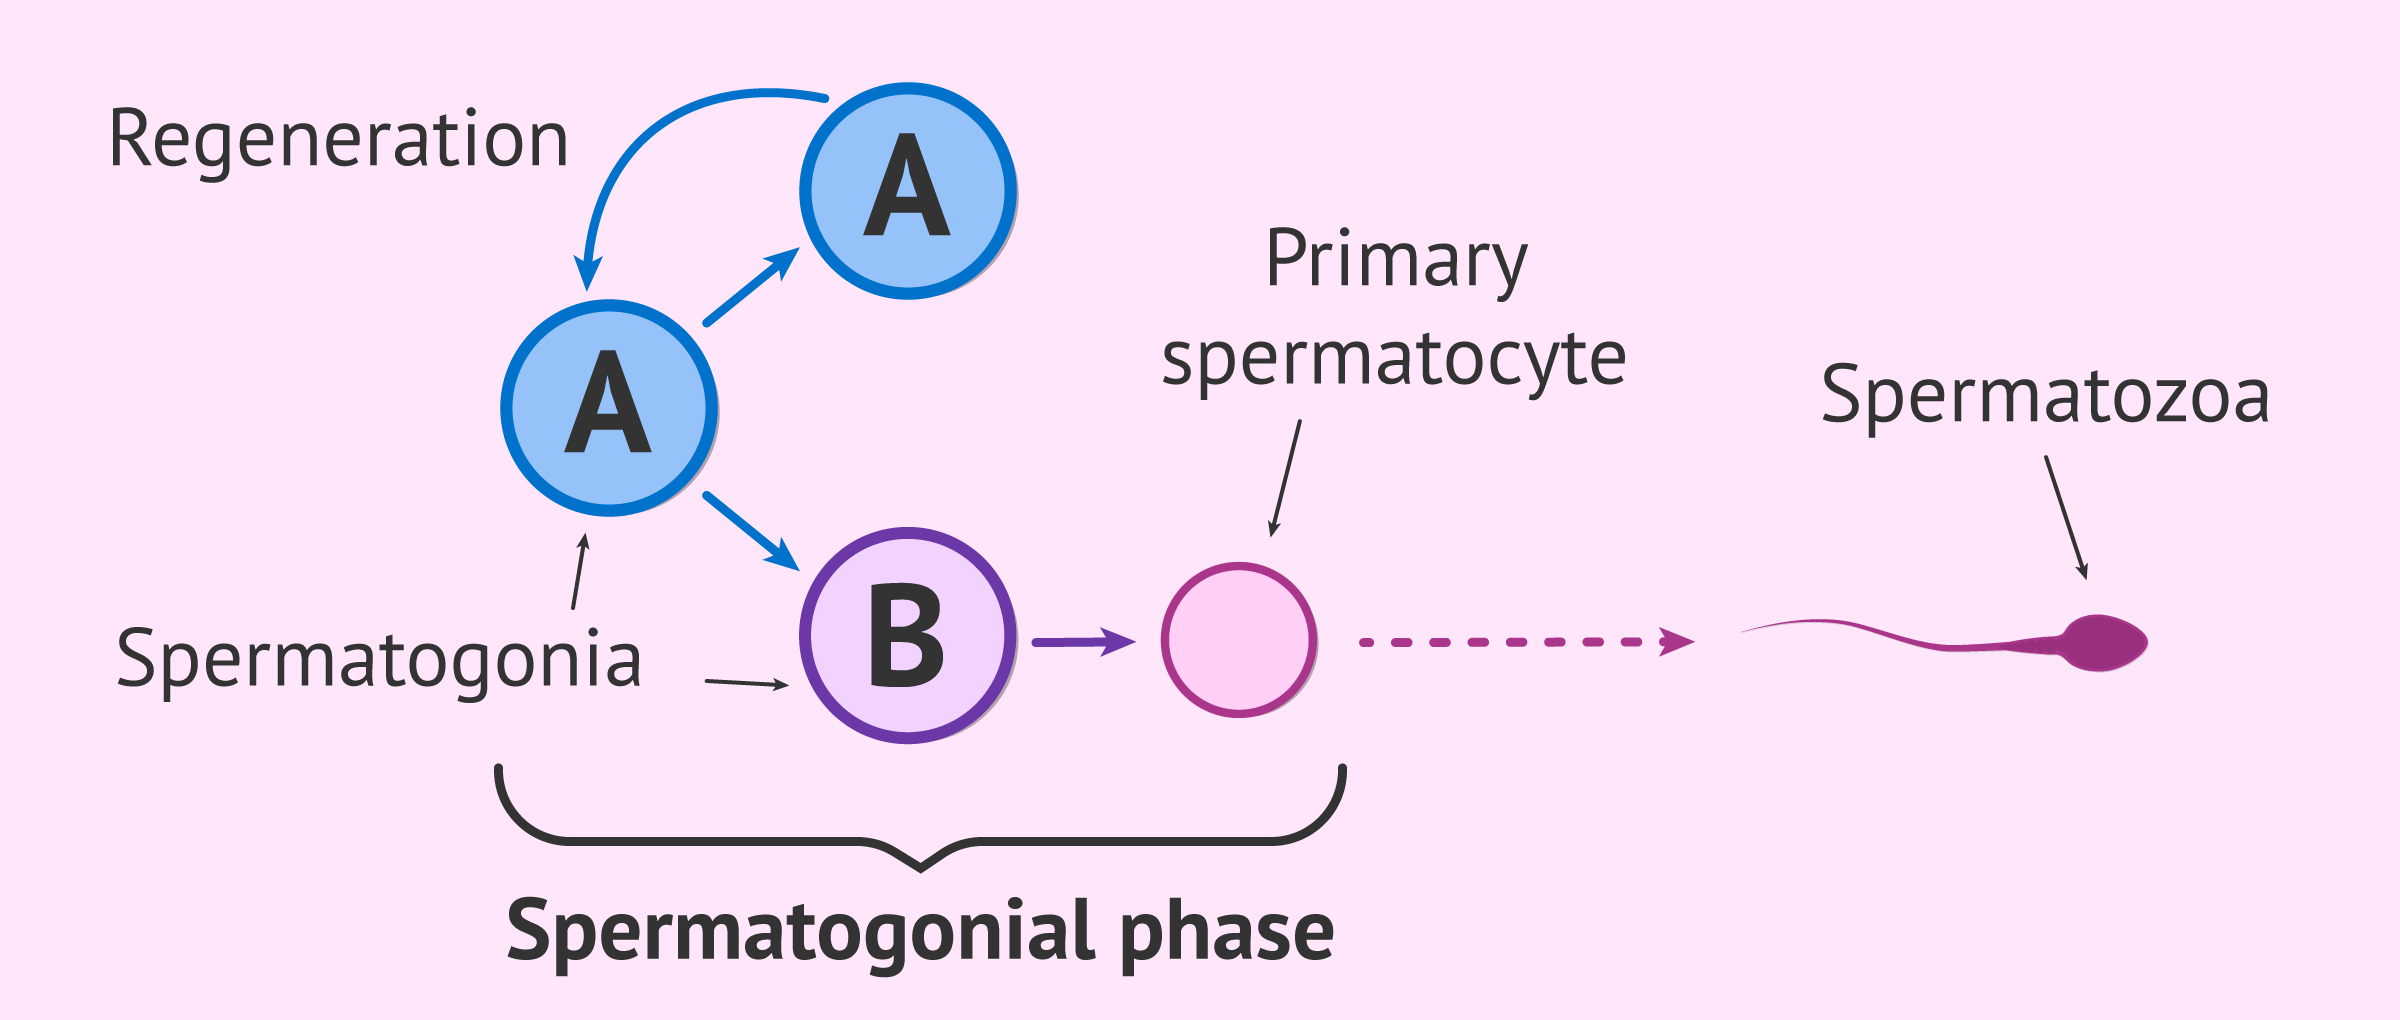 Spermatogonial phase in spermatozoa production